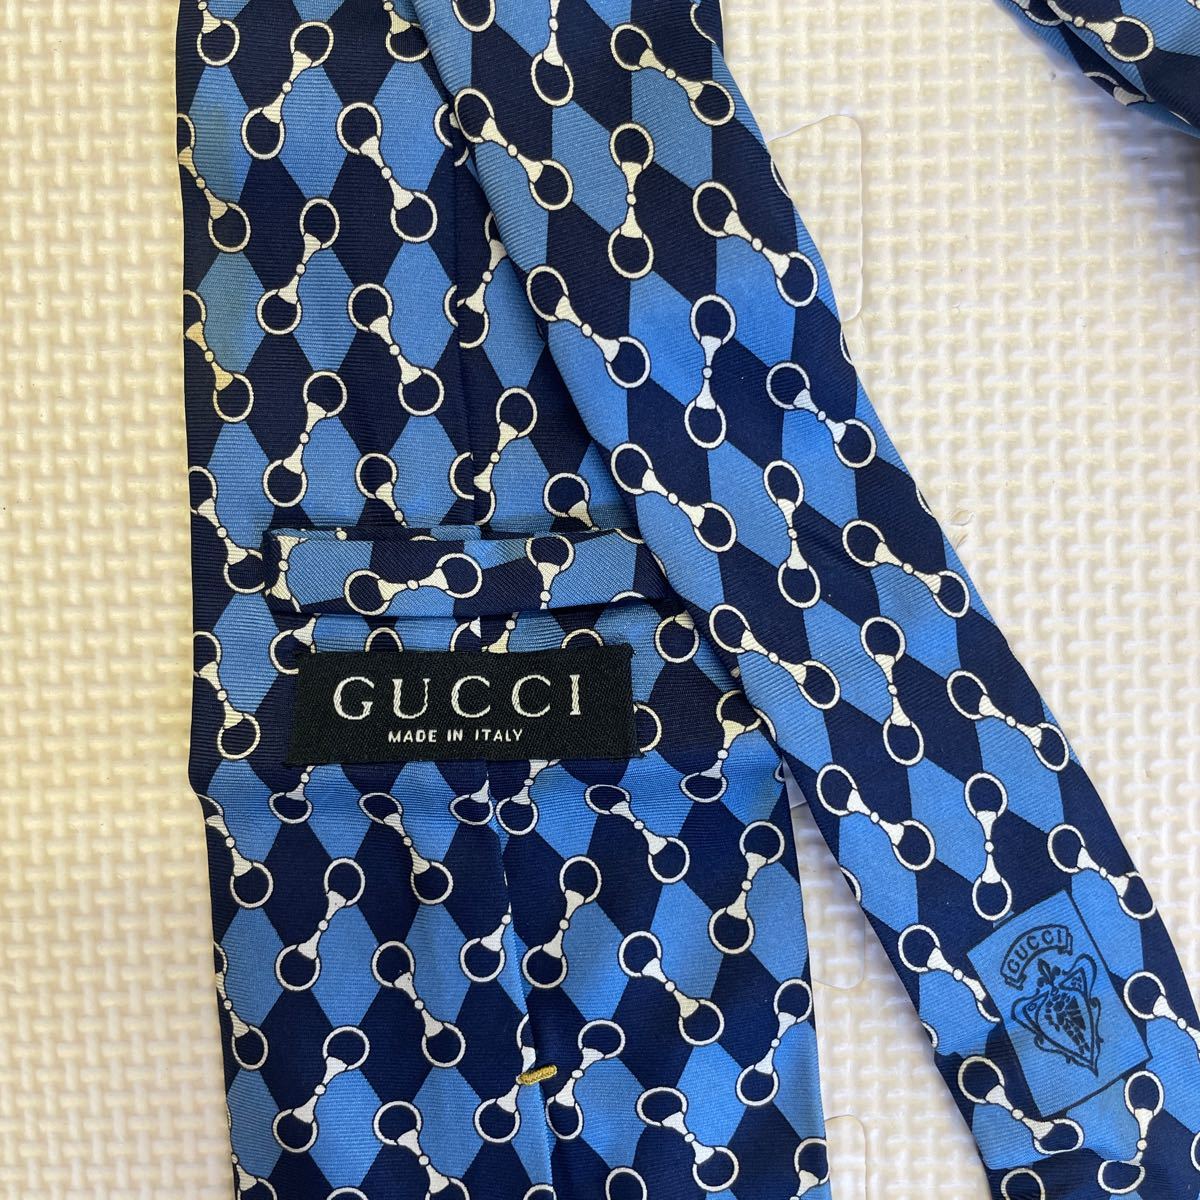 GUCCI Gucci галстук джентльмен бизнес темно-синий общий рисунок шелк 